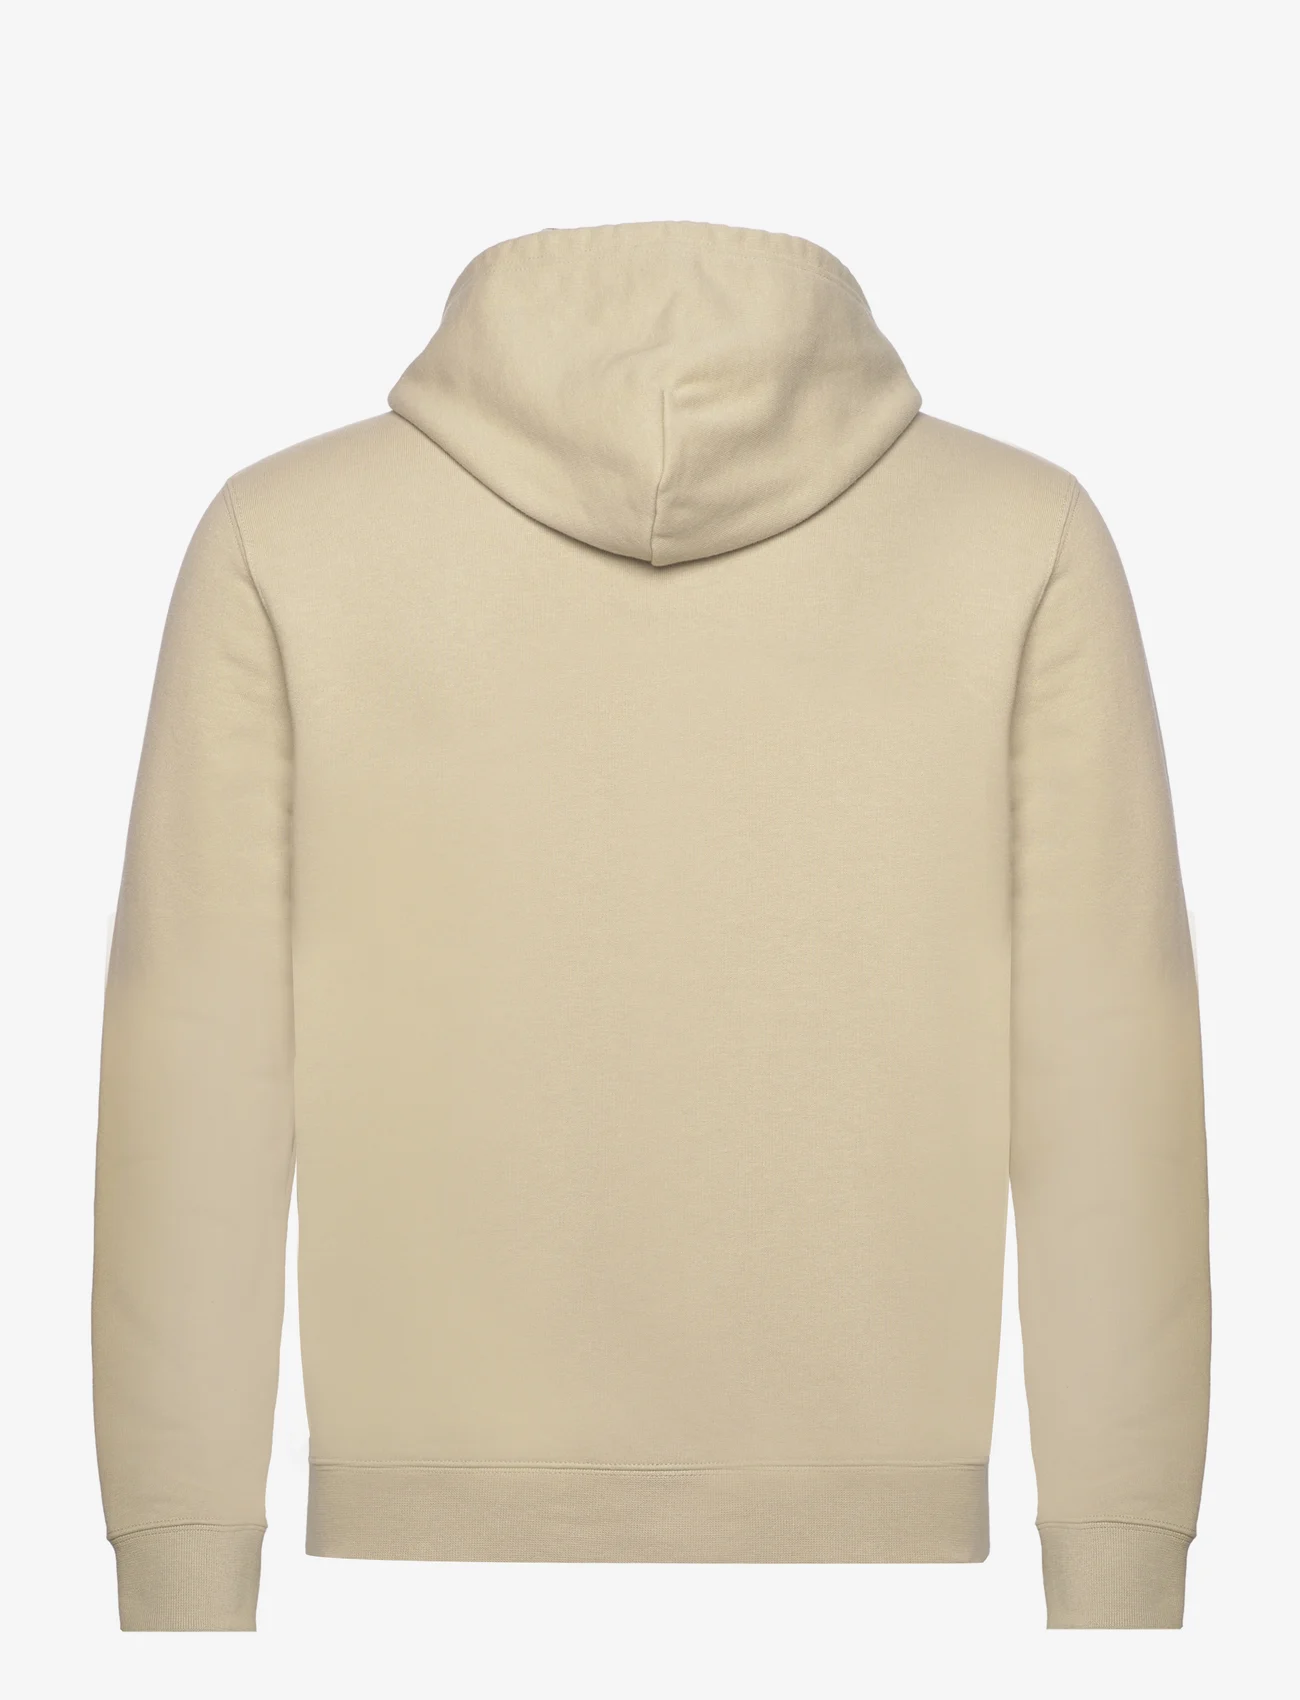 Champion - Hooded Sweatshirt - kapuzenpullover - twill - 1